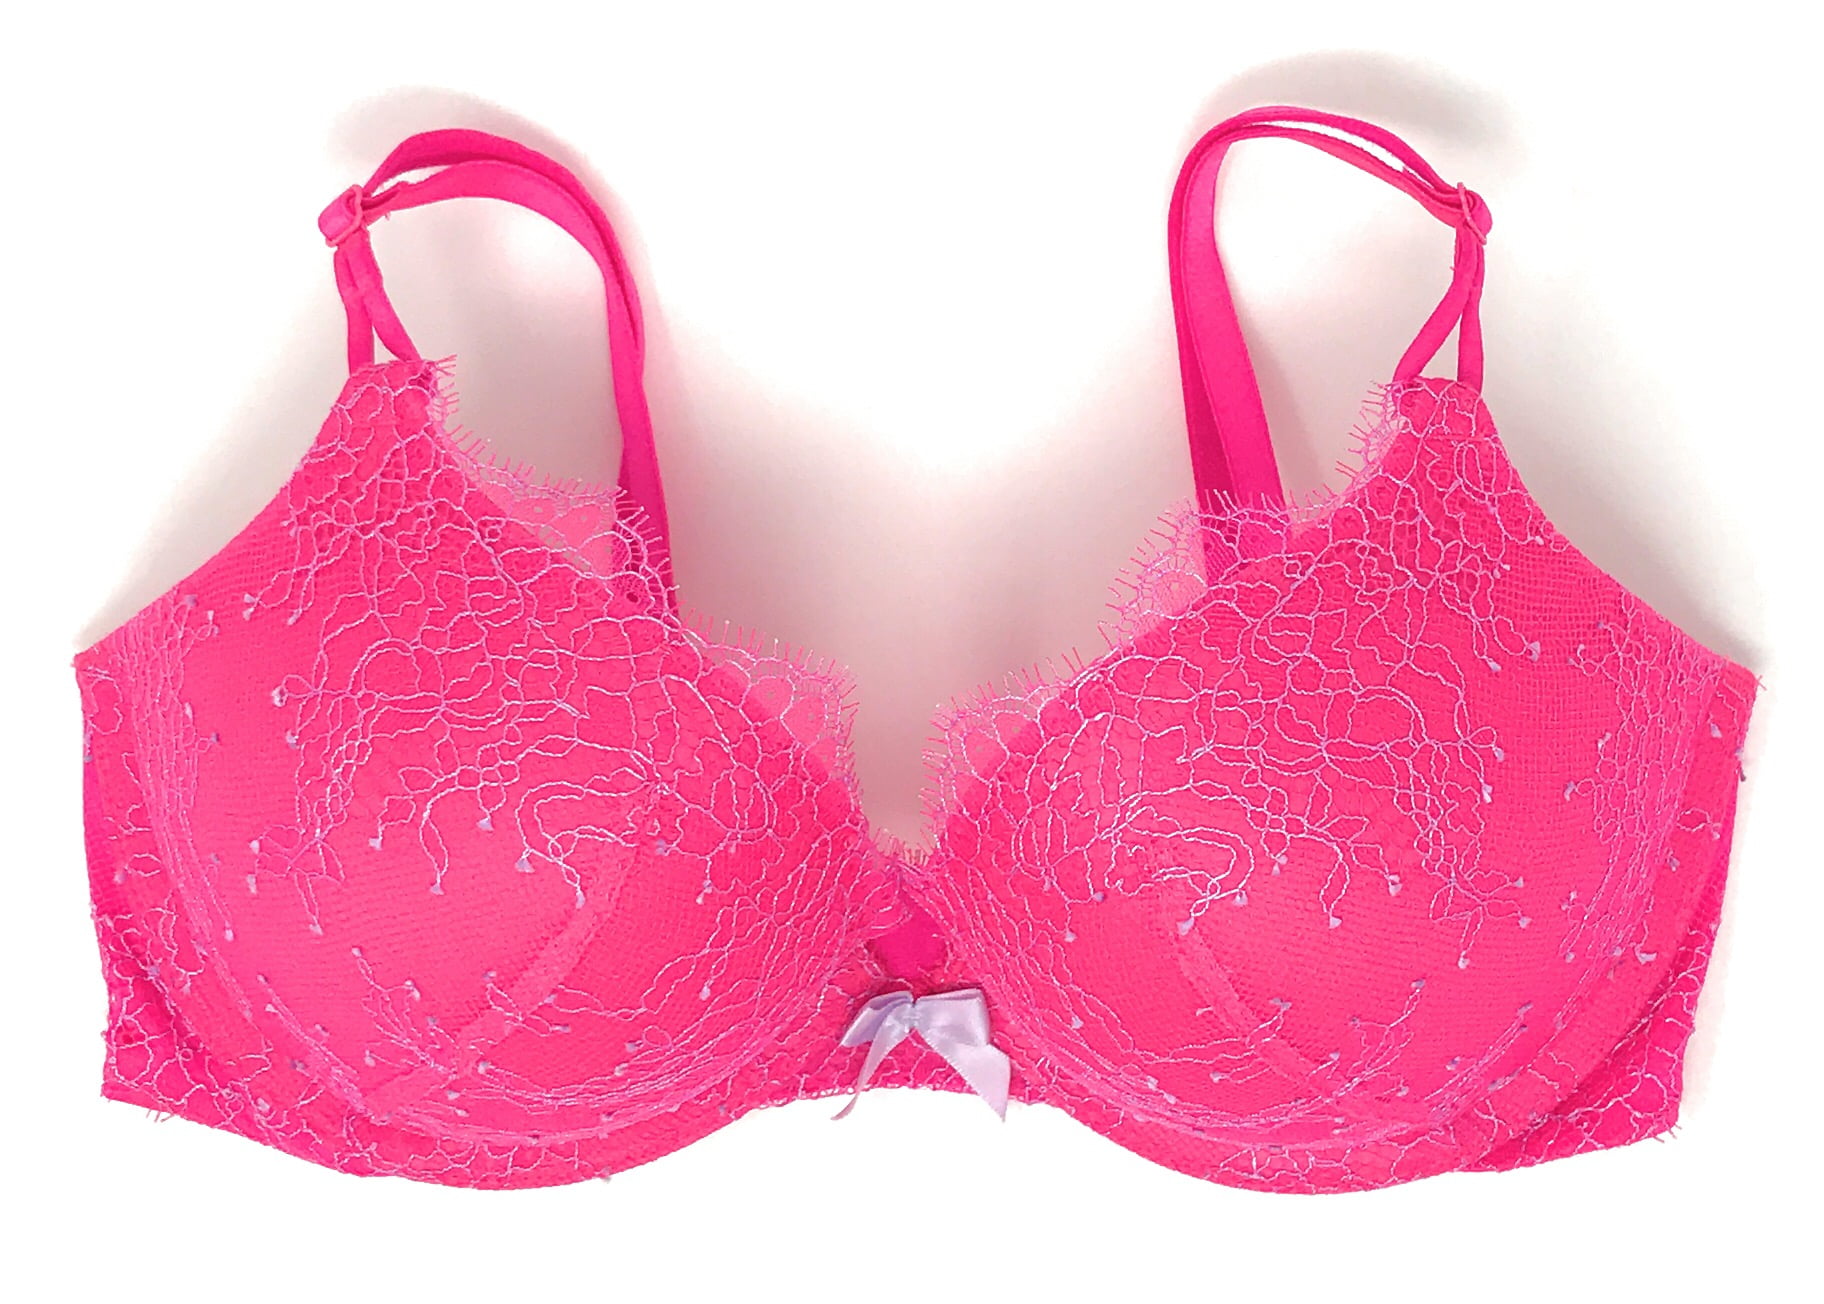 Victoria's Secret, Intimates & Sleepwear, Nwot Very Sexy Bombshell  Add2cups Shine Pushup Bra 34c Pink